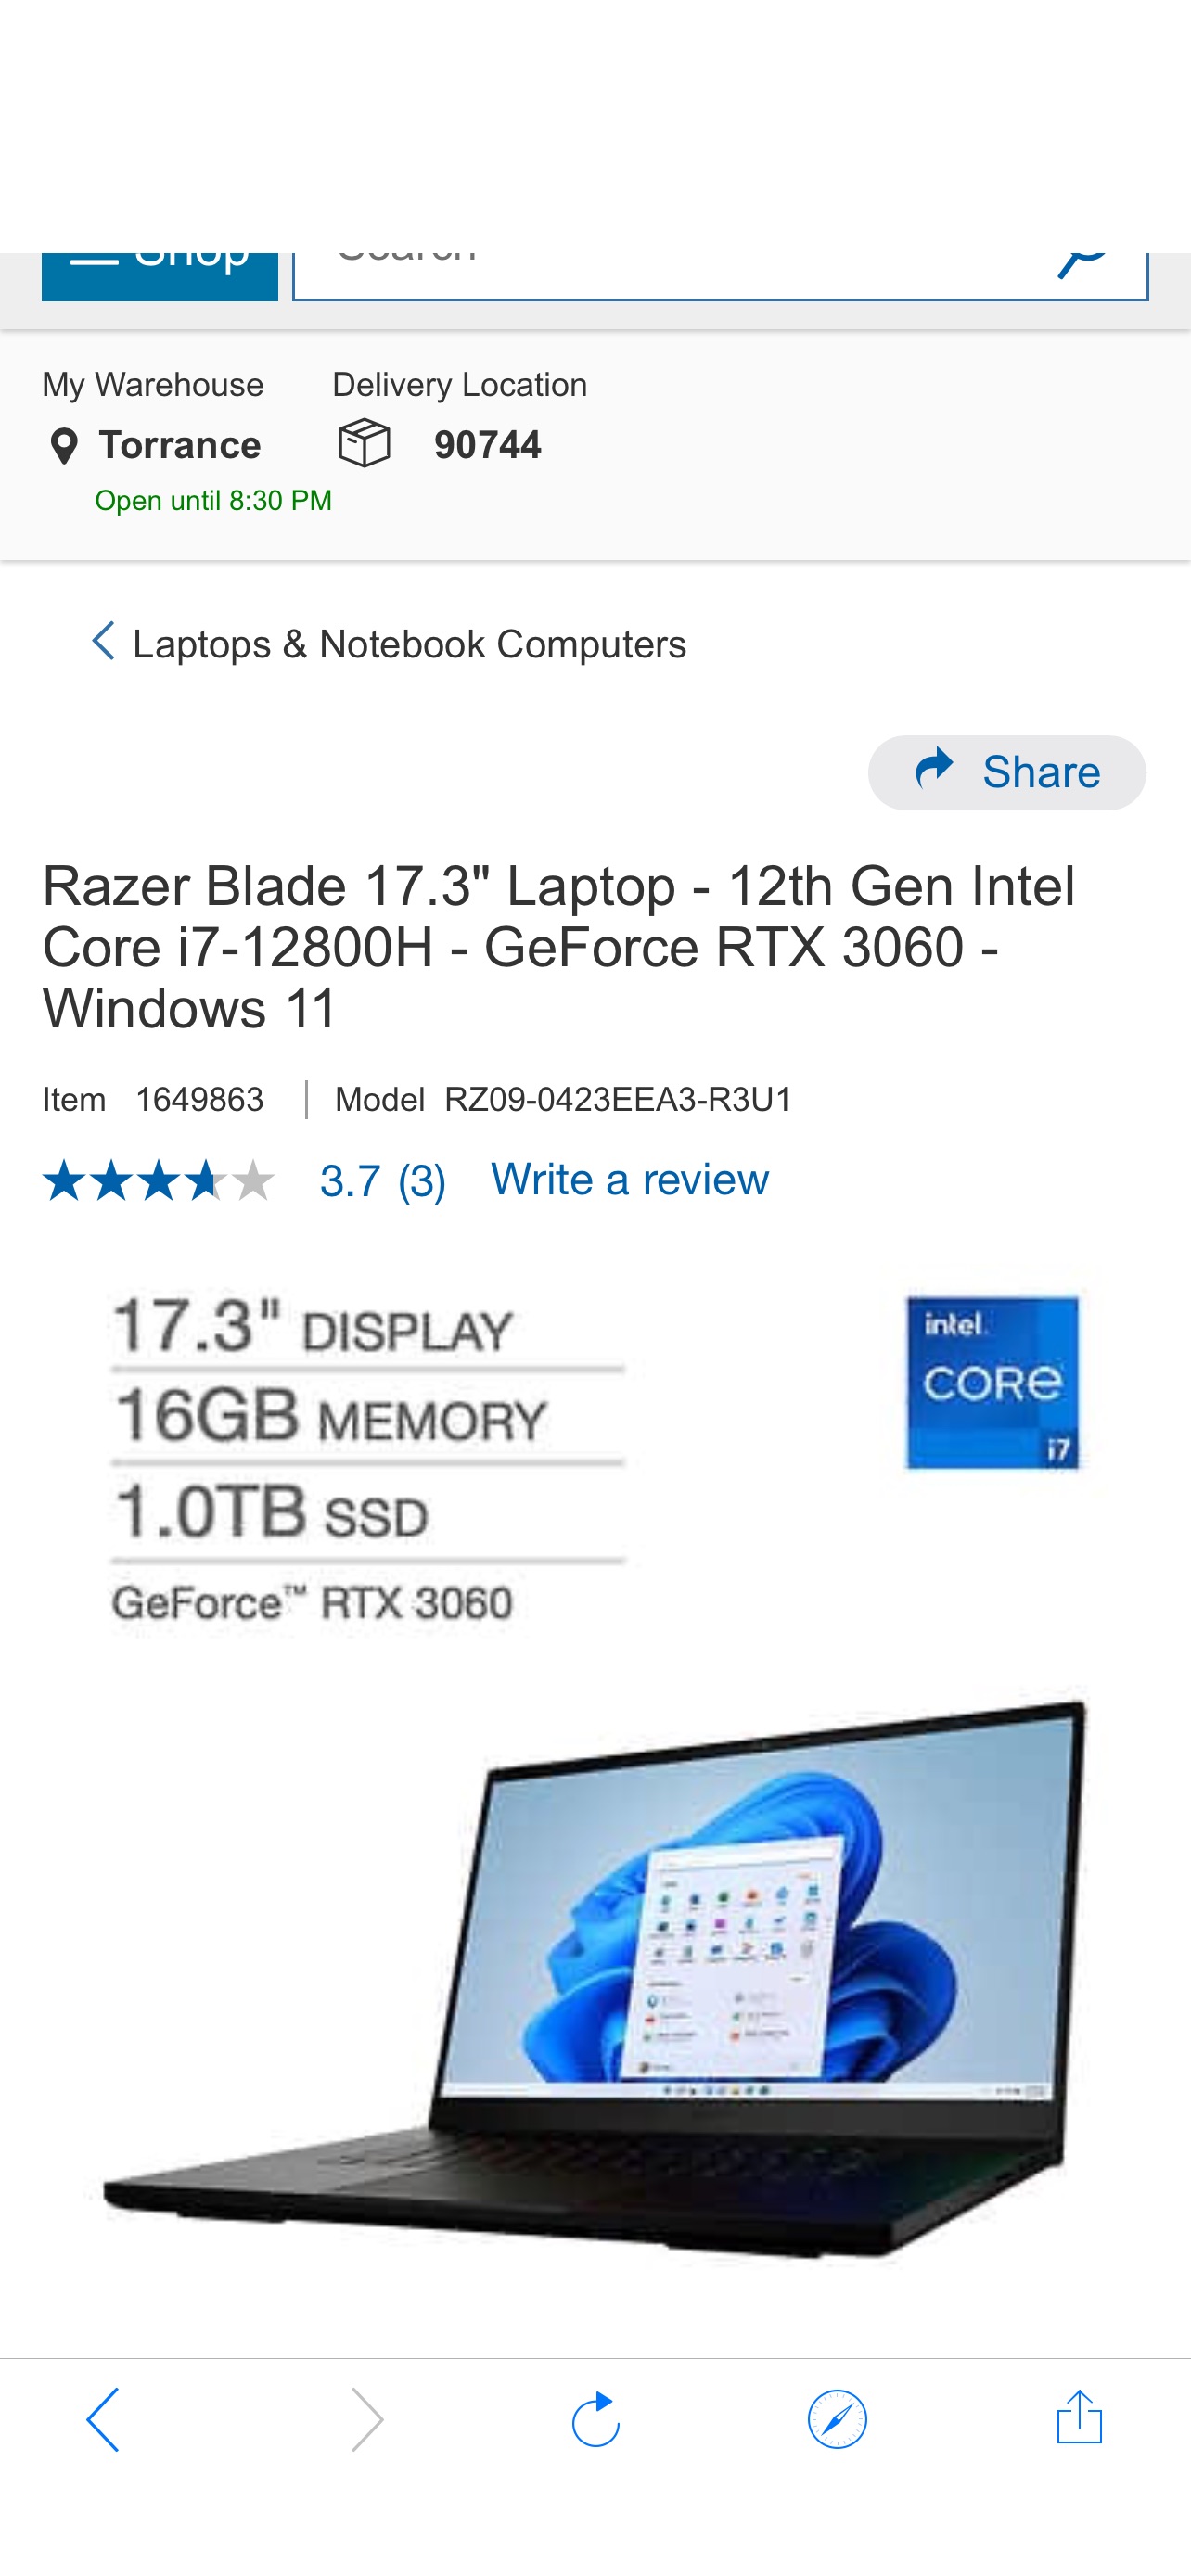 Razer Blade 17.3" Laptop - 12th Gen Intel Core i7-12800H - GeForce RTX 3060 - Windows 11 | Costco